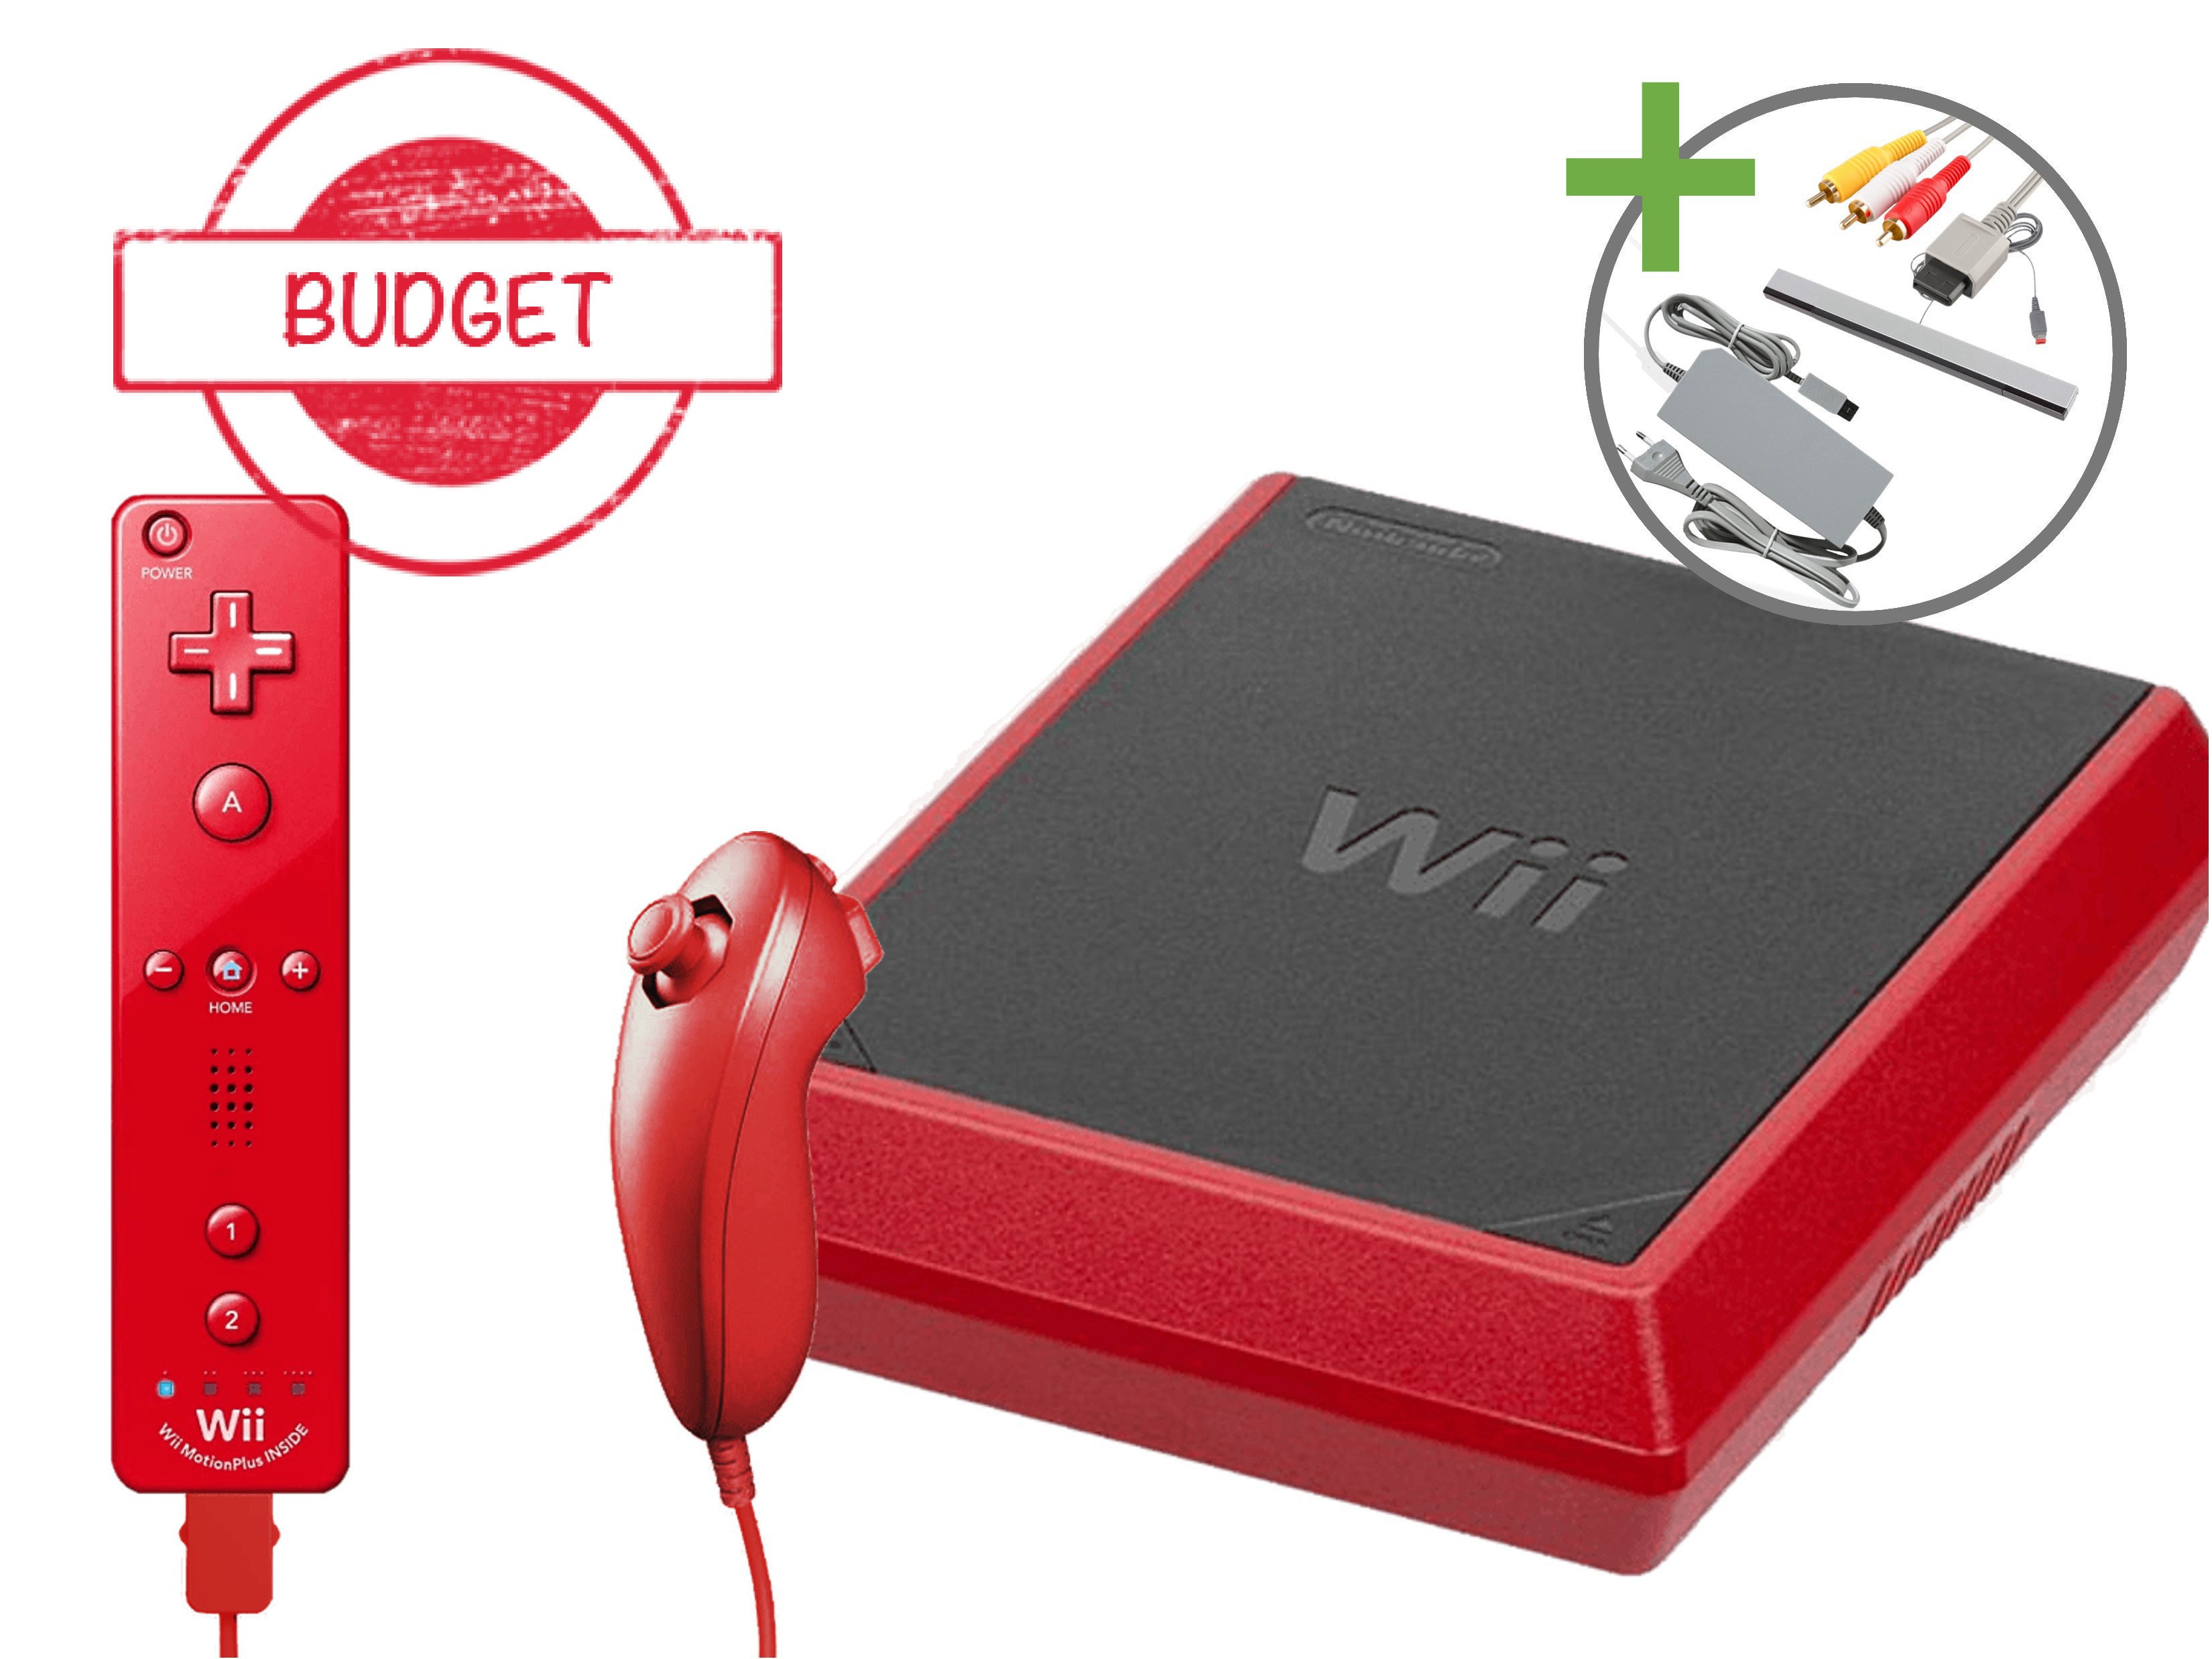 Nintendo Wii Mini Starter Pack - Motion Plus Edition - Budget - Wii Hardware